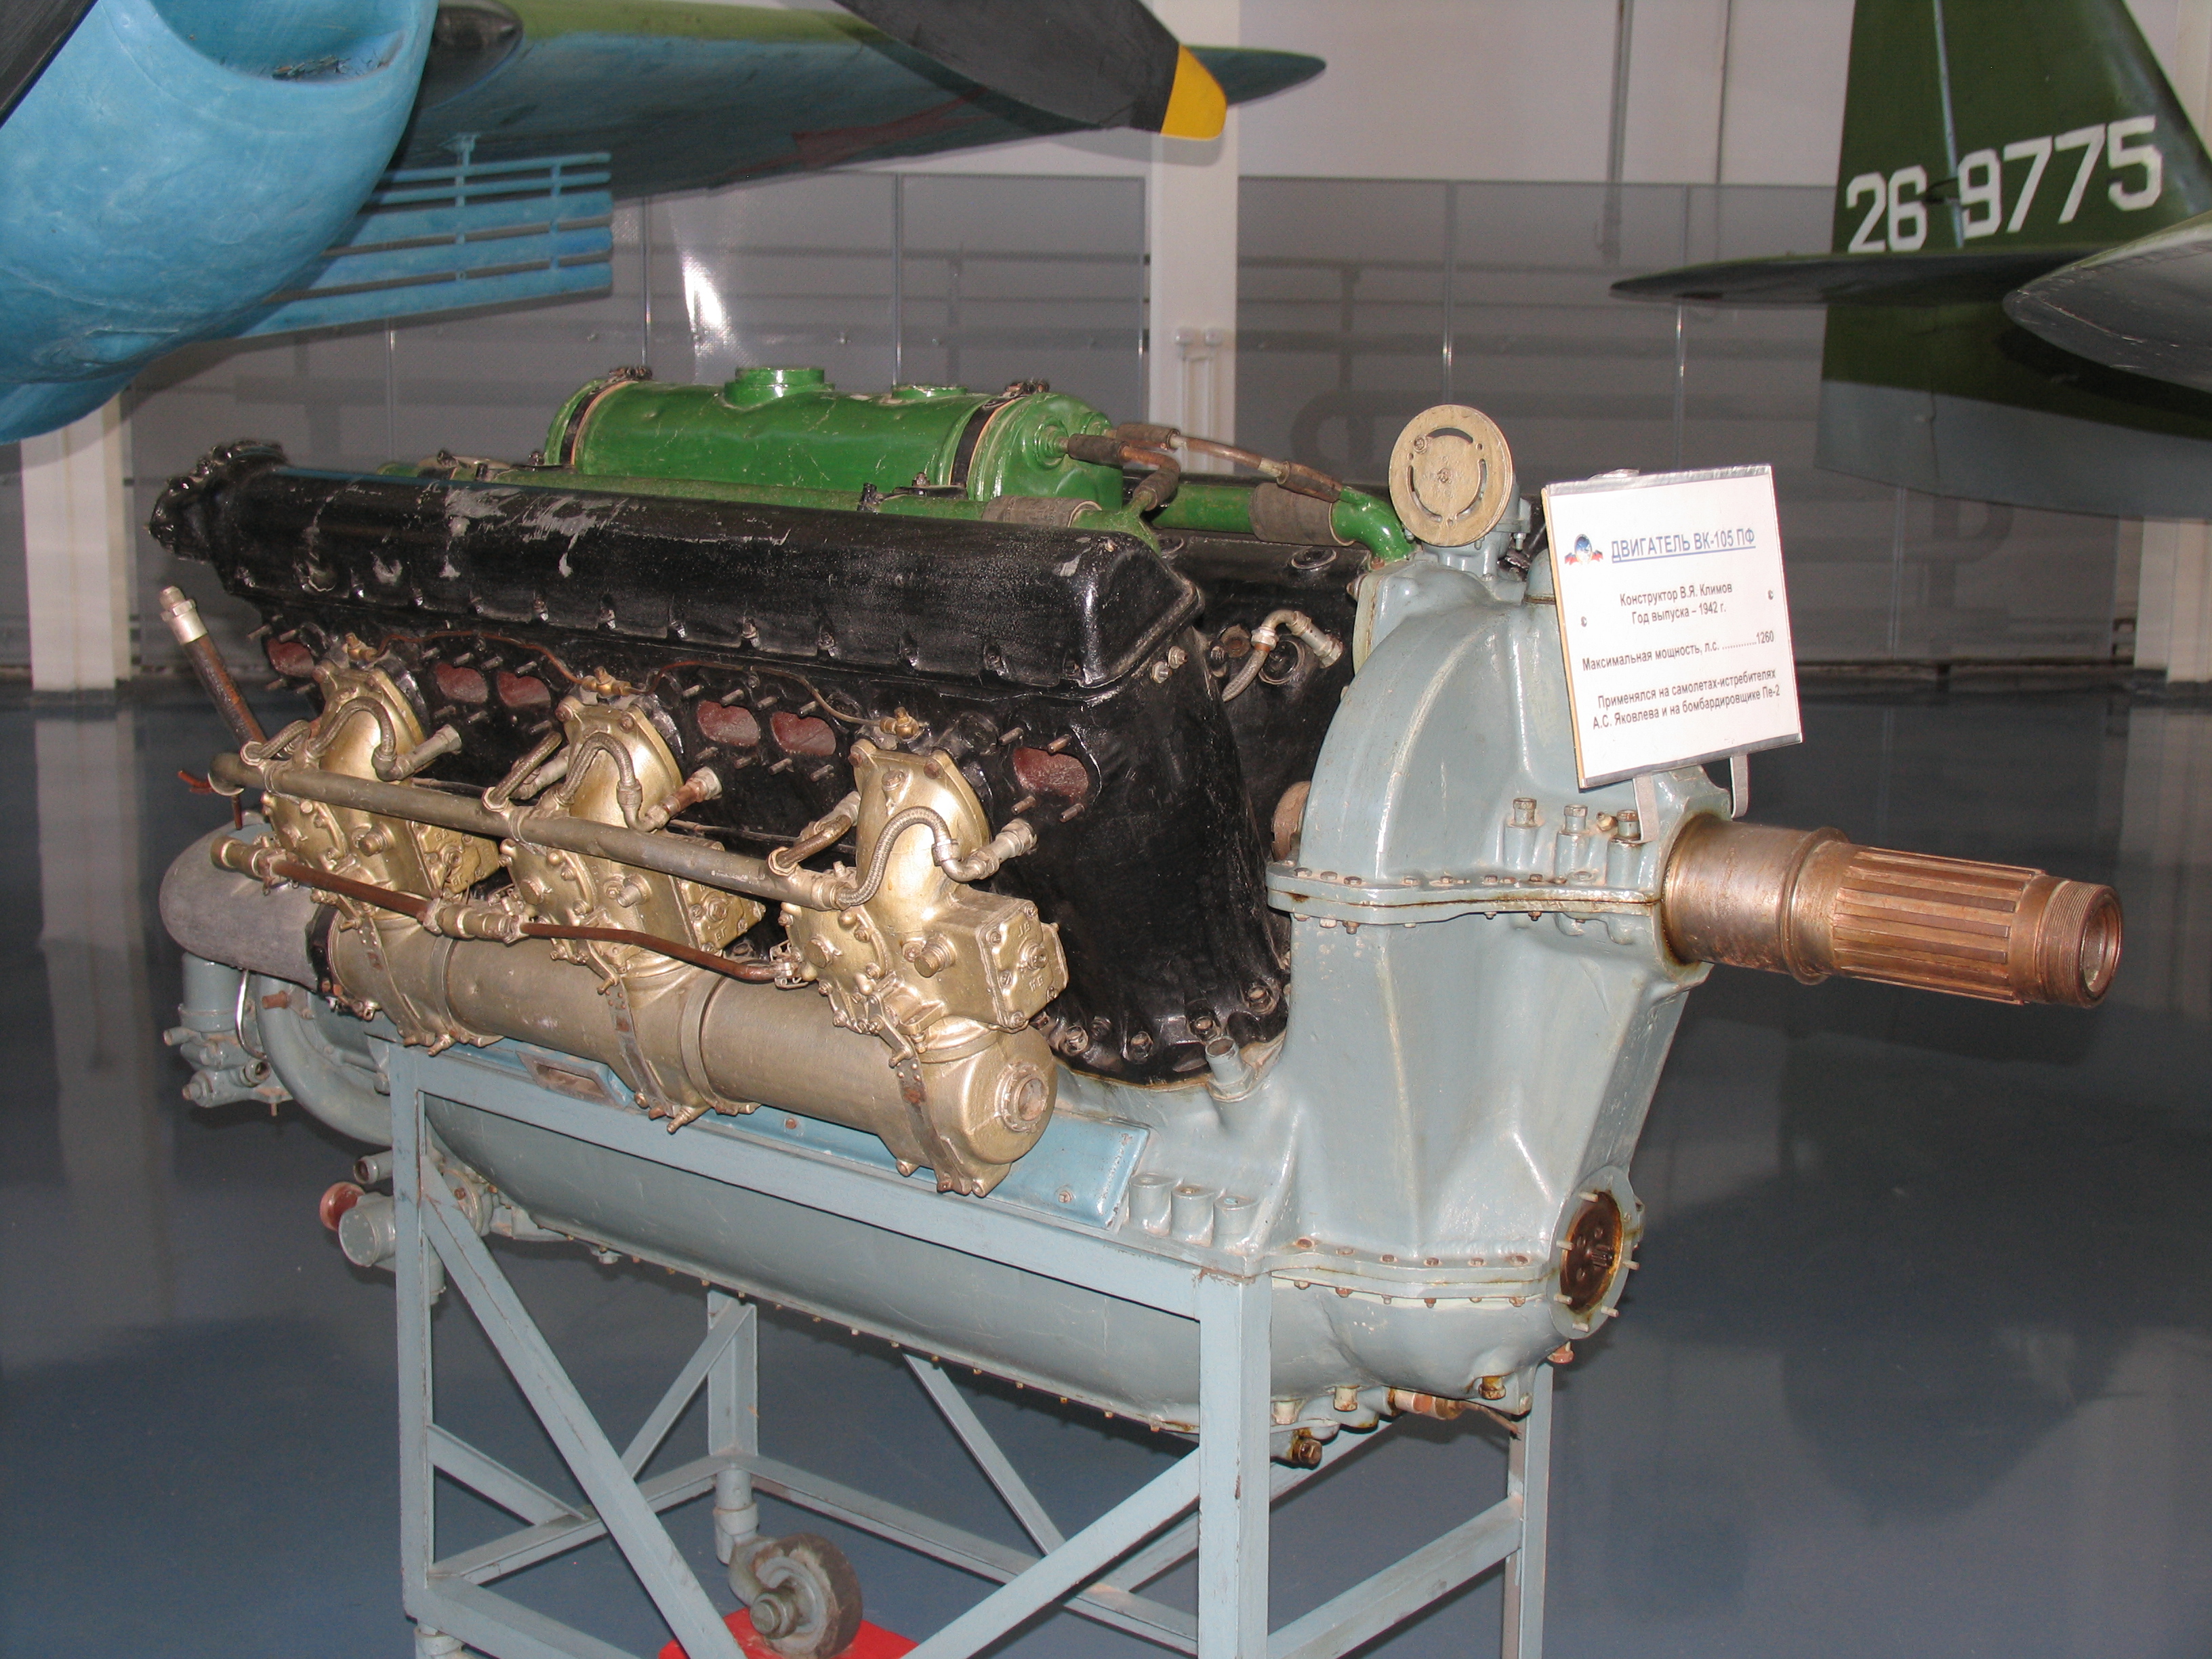 v12 airplane engine